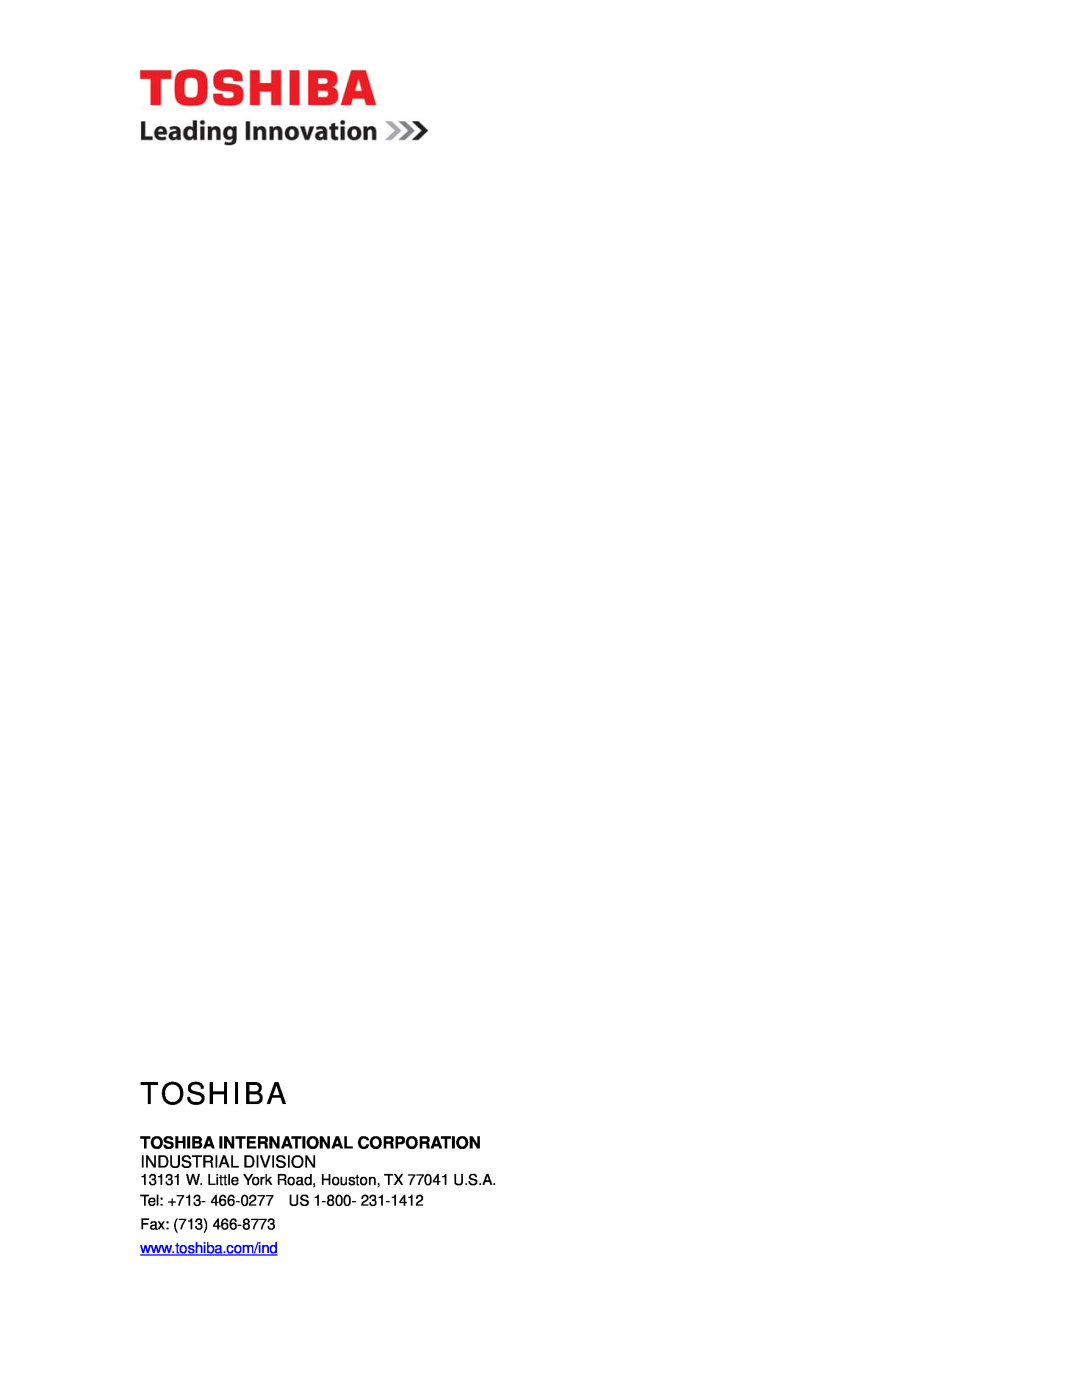 Toshiba HV6CS-MLD, H6A-HLS operation manual Toshiba International Corporation, Fax 